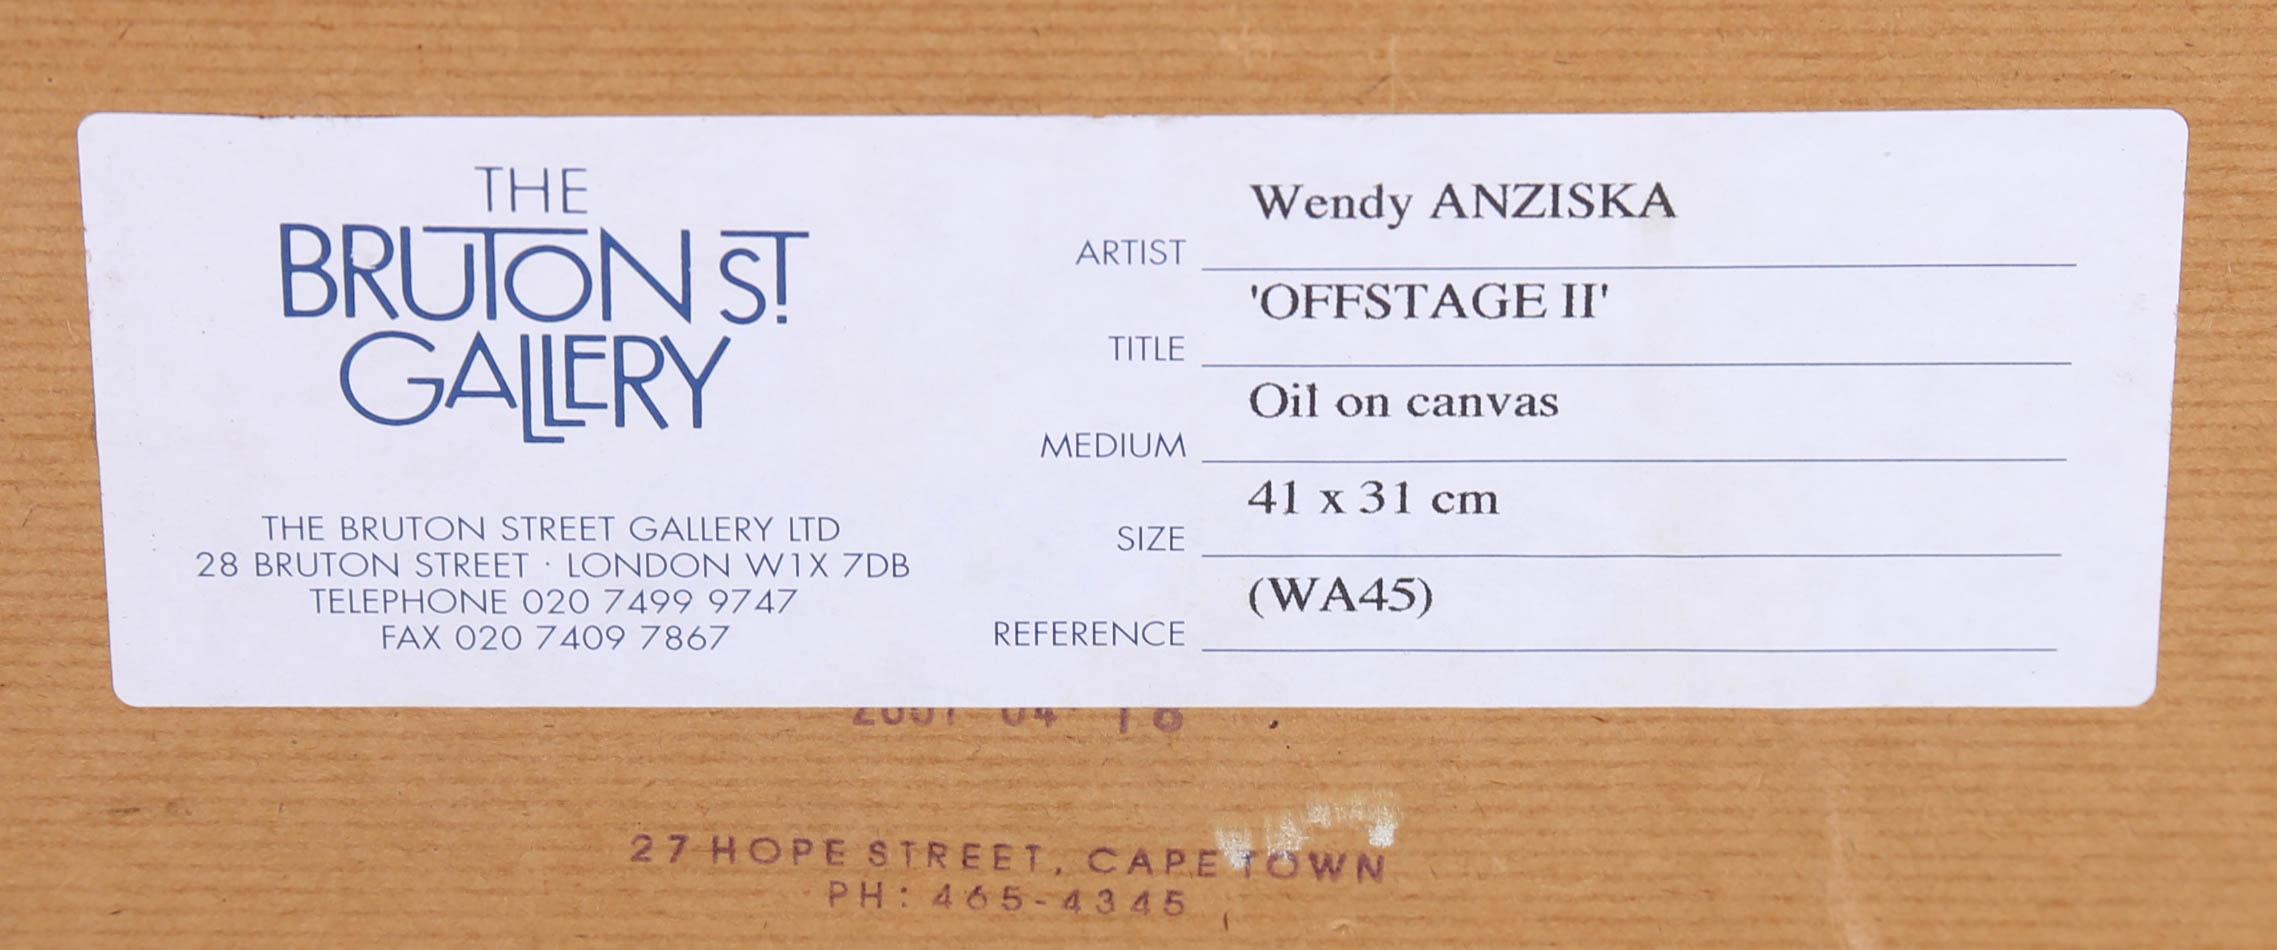 Wendy Anziska (geb. 1945)  lgemlde, Offstage II, 20. Jahrhundert im Angebot 4